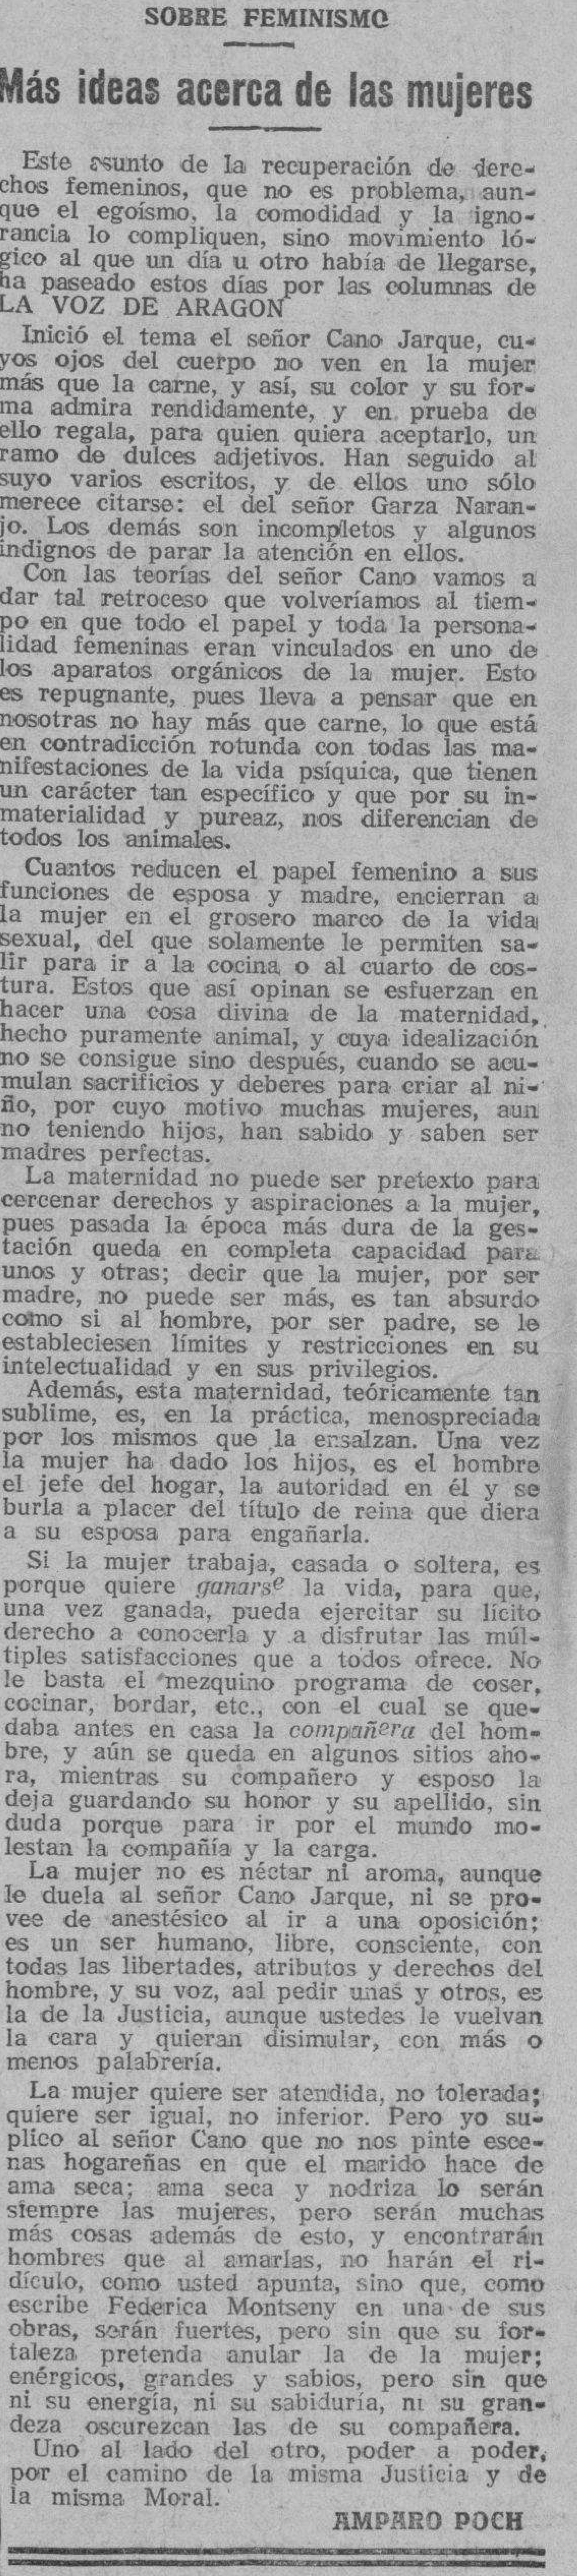 lavozdearabgon 28.11.1928. poch. feminismo